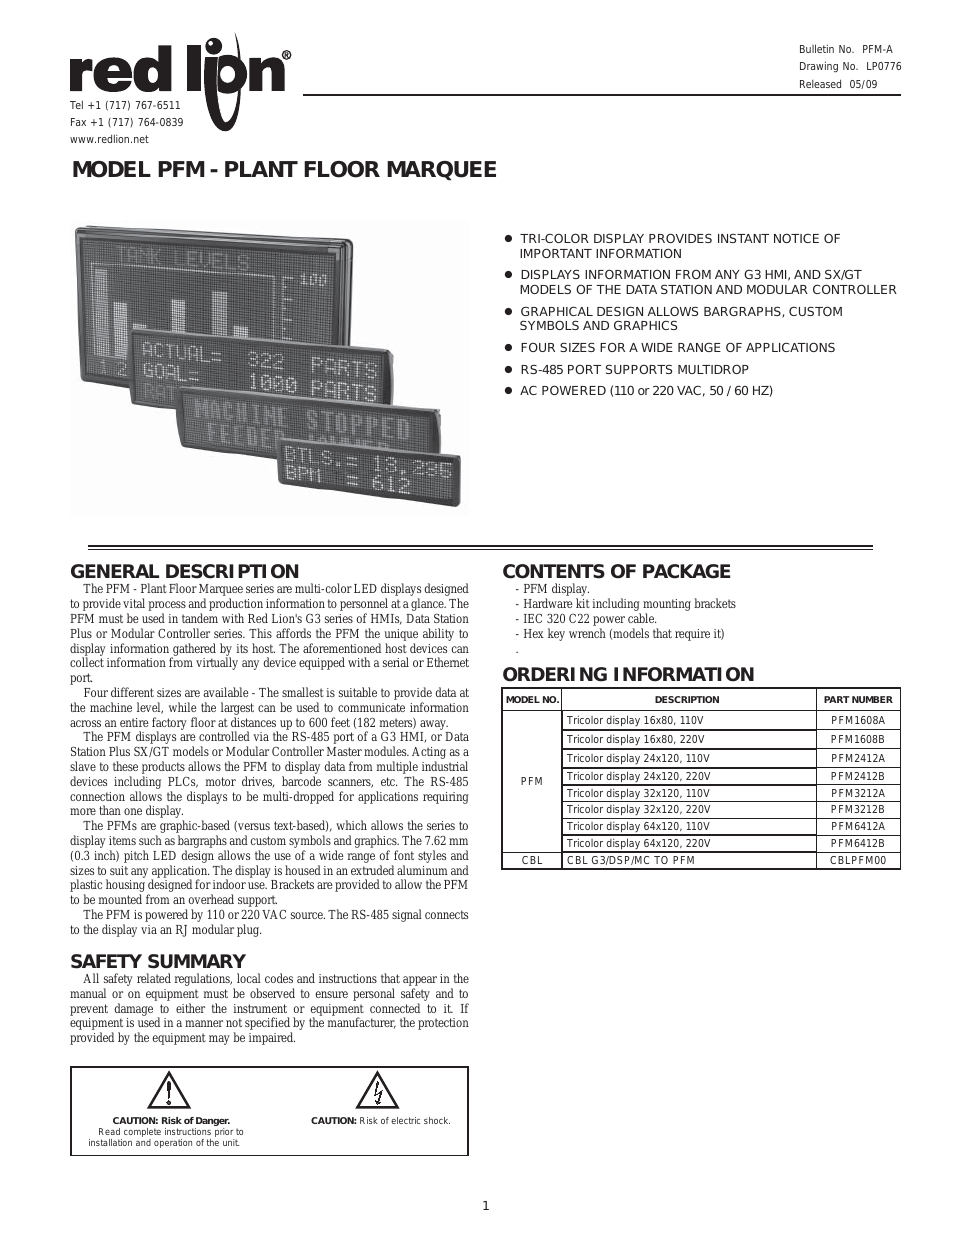 PFM - Plant Floor Marquee